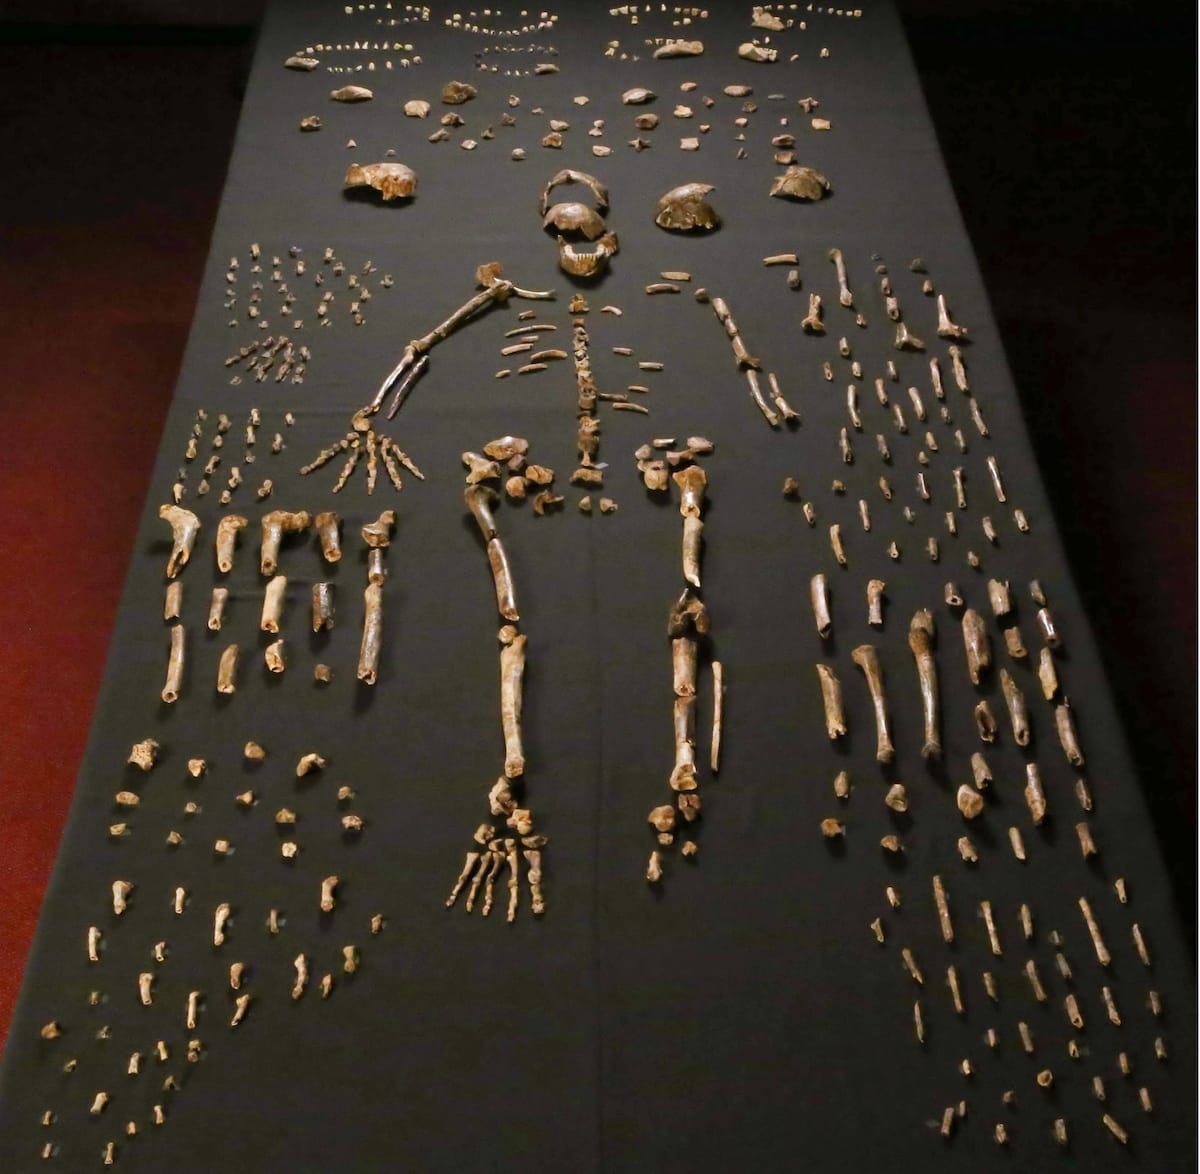 skeletal pieces of hominin Homo naledi spread out on a table